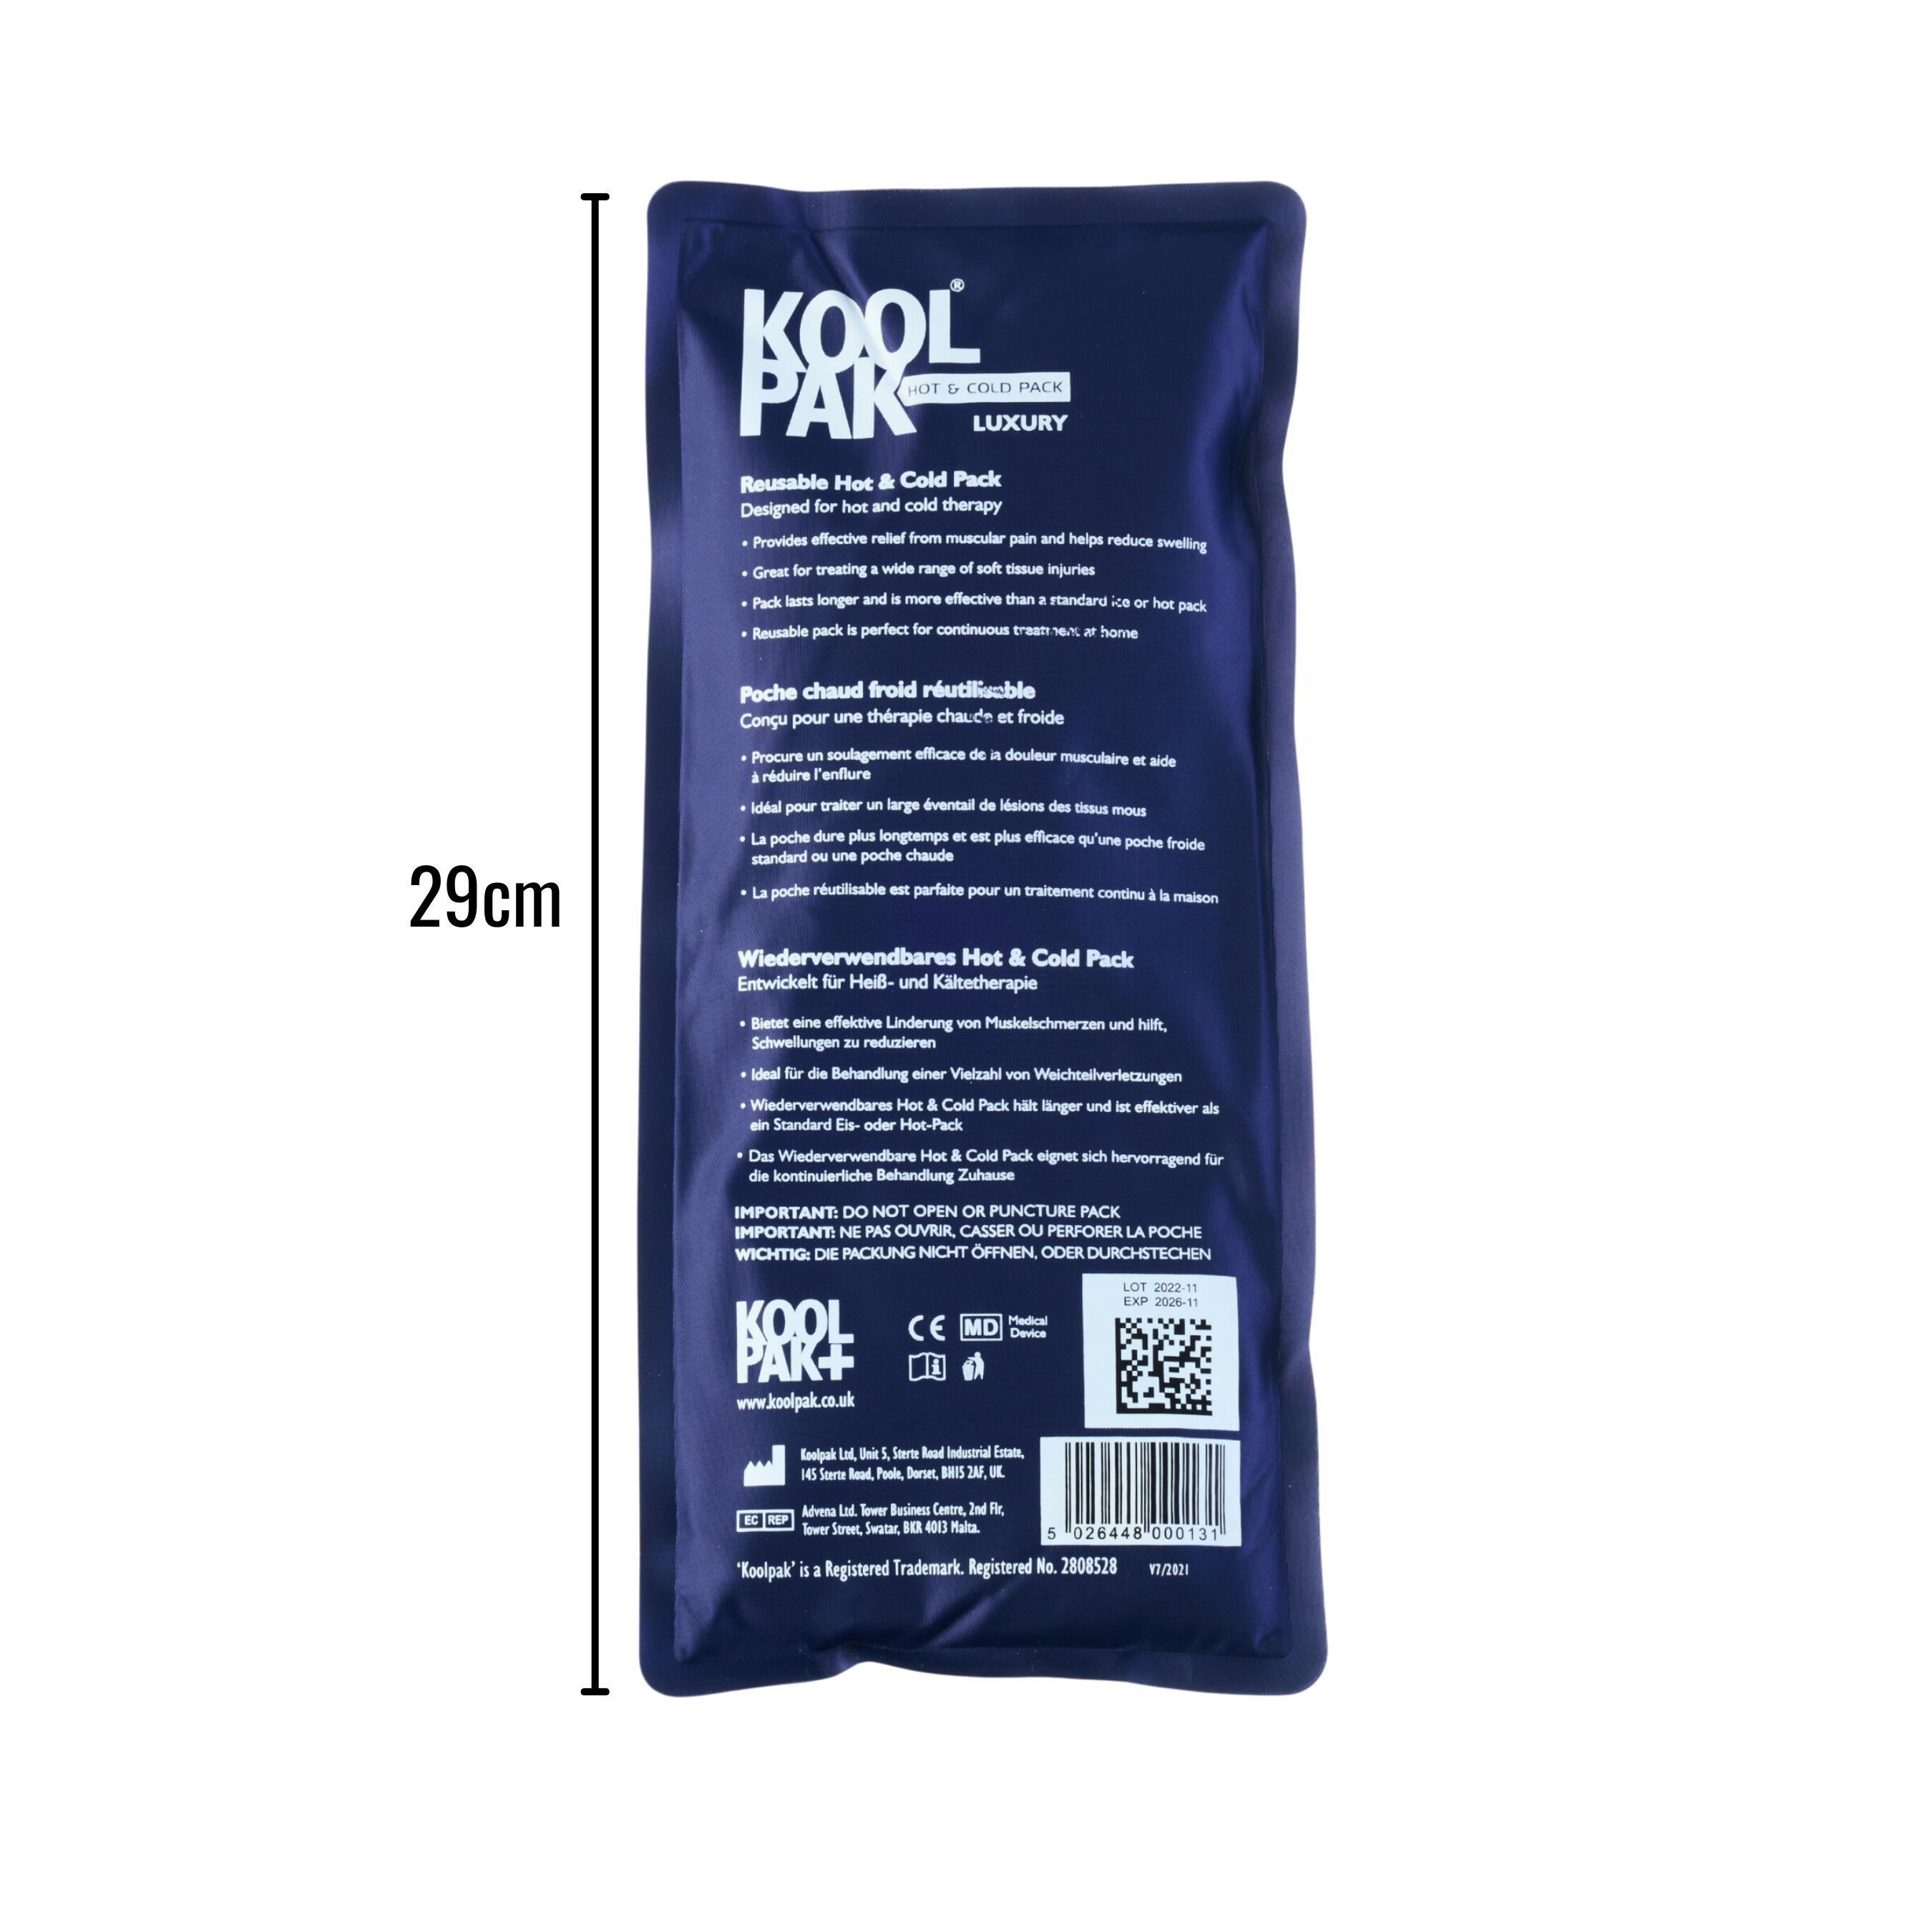 Koolpak Luxury Reusable Hot & Cold Pack 12 X 29cm - Pack Of 30 5/6